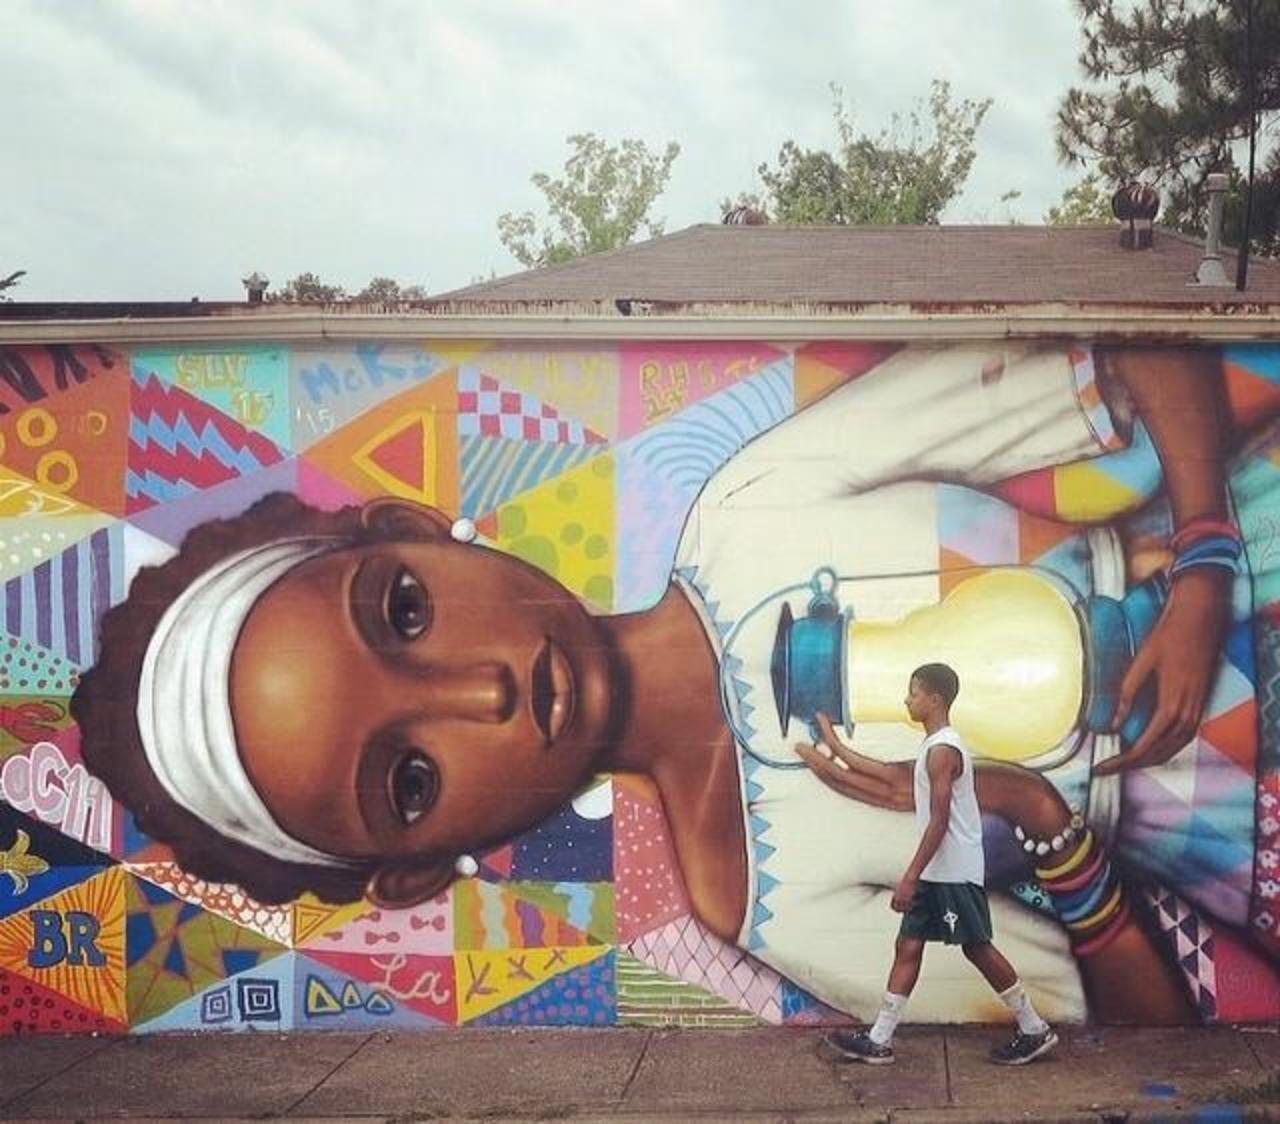 RT @designopinion: Artist #Seth recent wonderful Street Art wall in Baton Rouge, Louisiana, USA #art #mural #graffiti #streetart http://t.co/N4GF9XdXPa